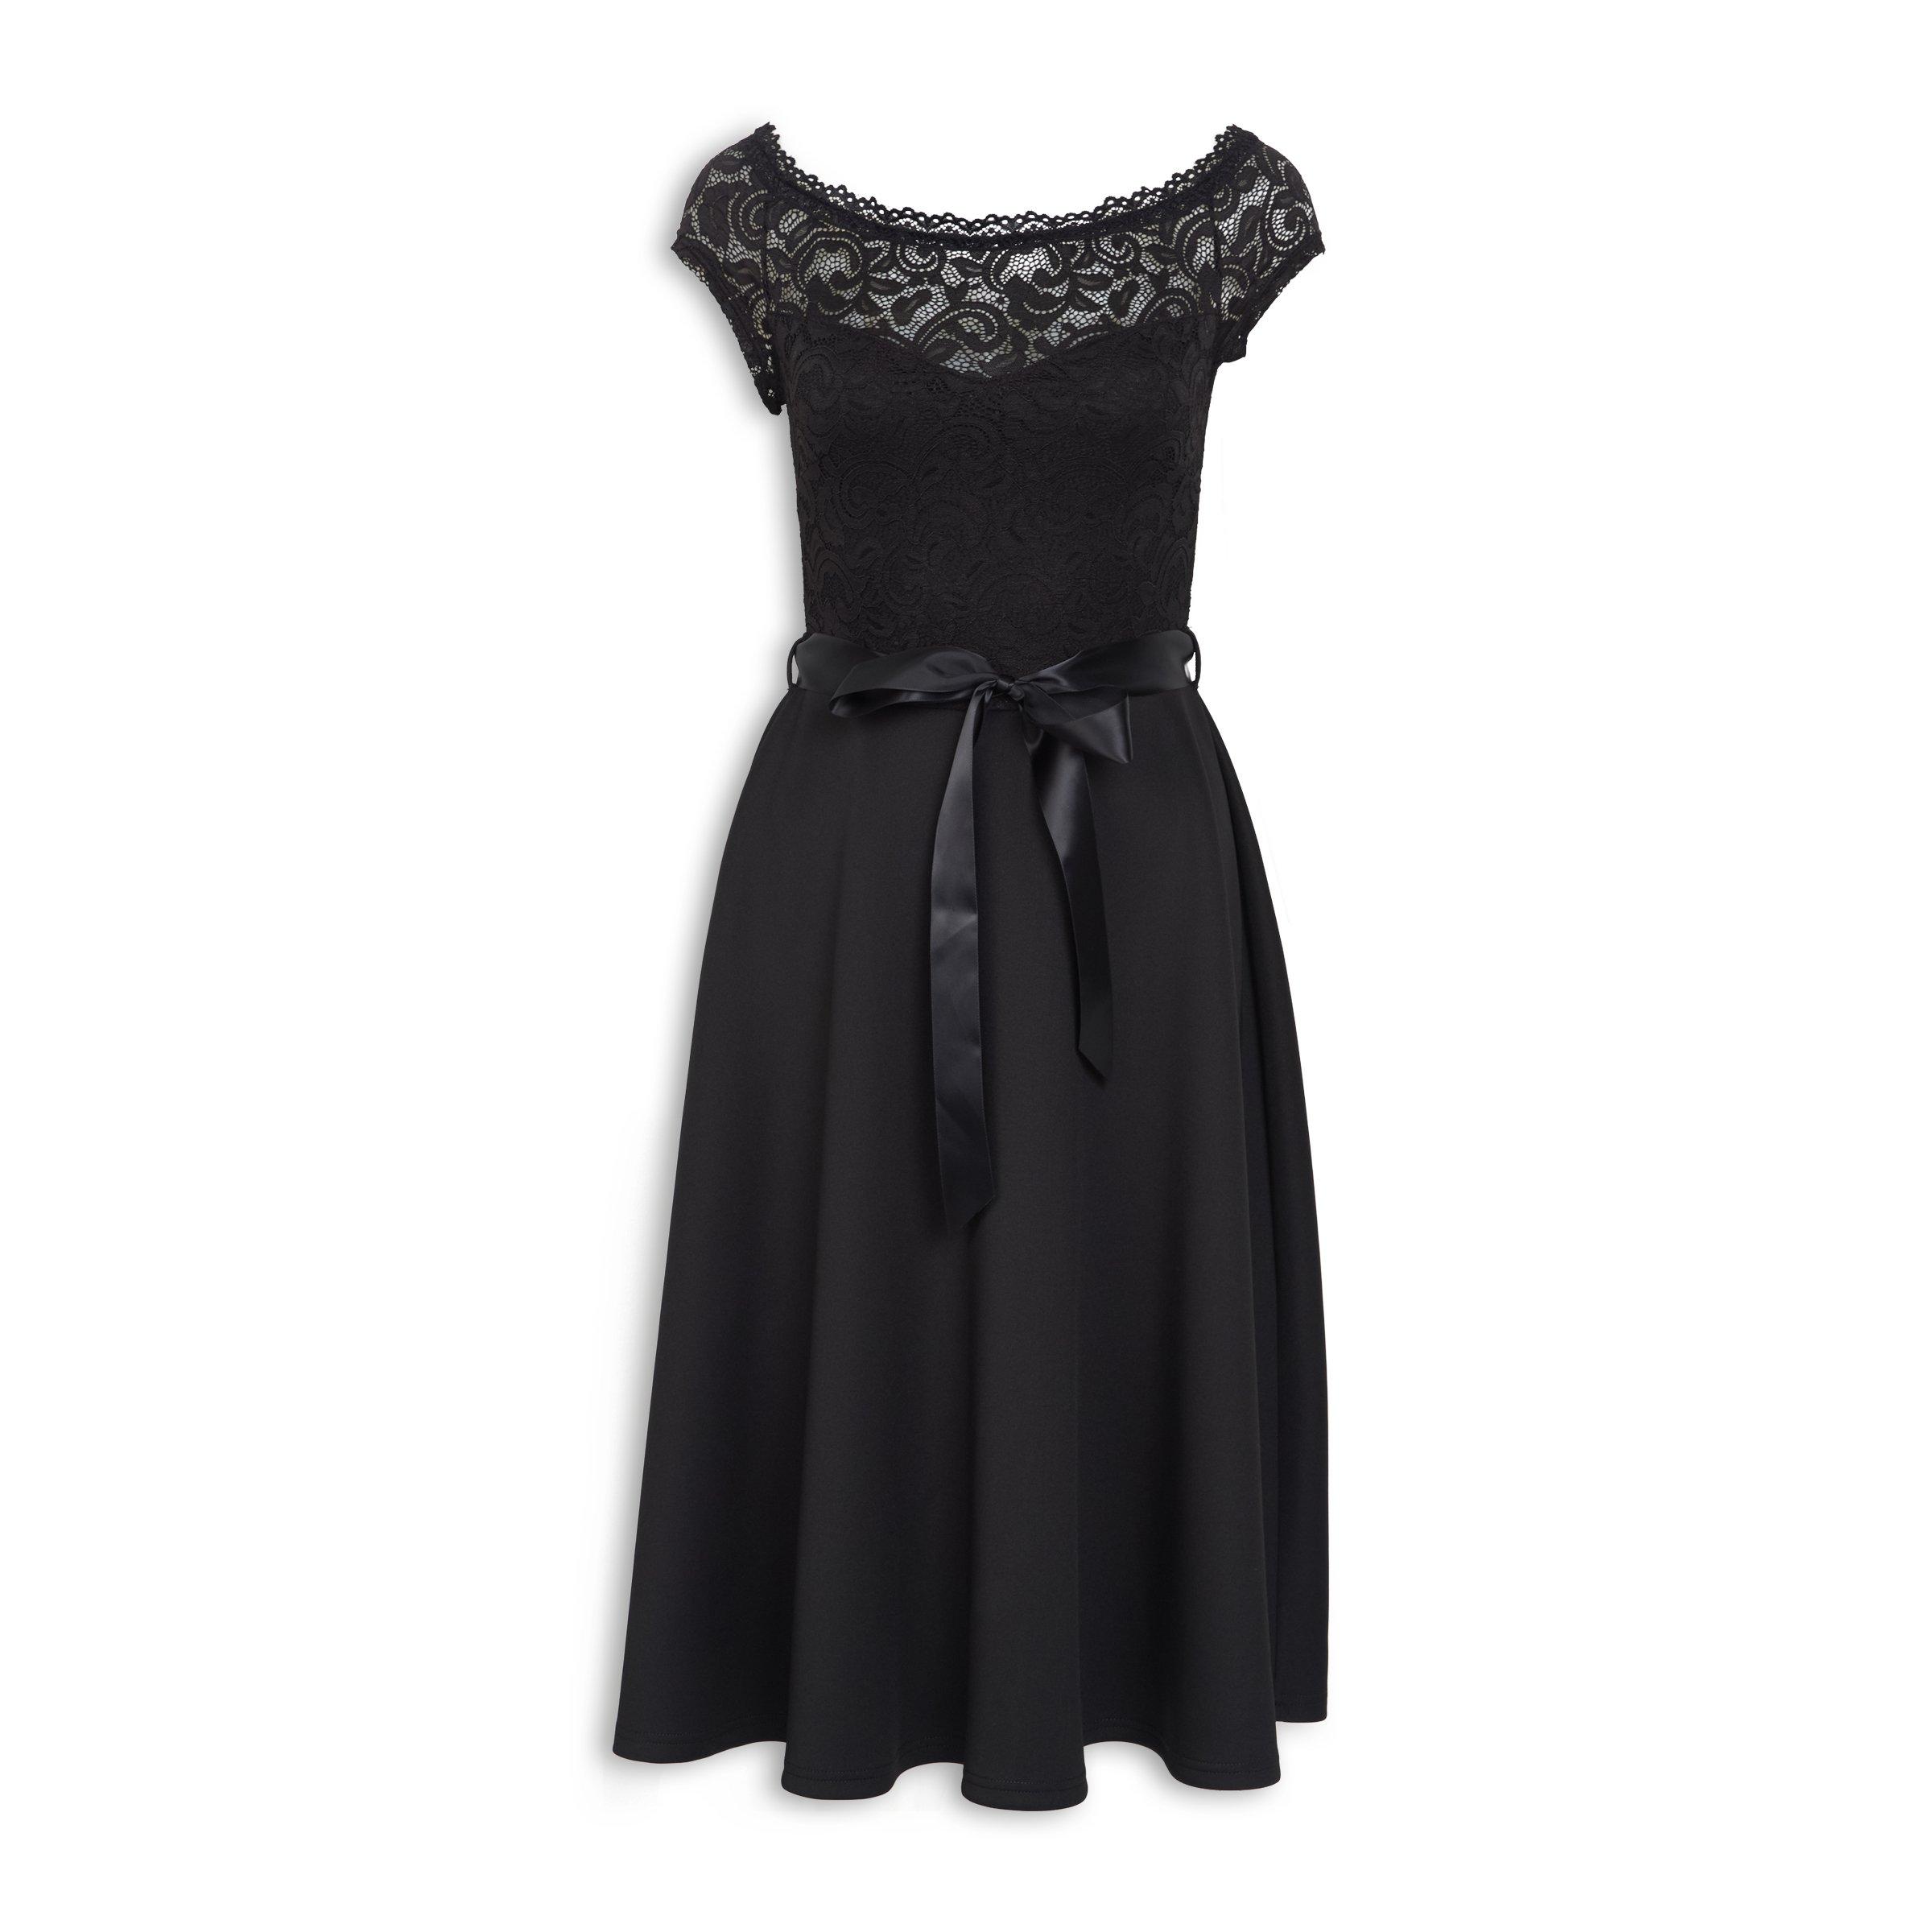 Buy Finnigans Black Lace Dress Online | Truworths